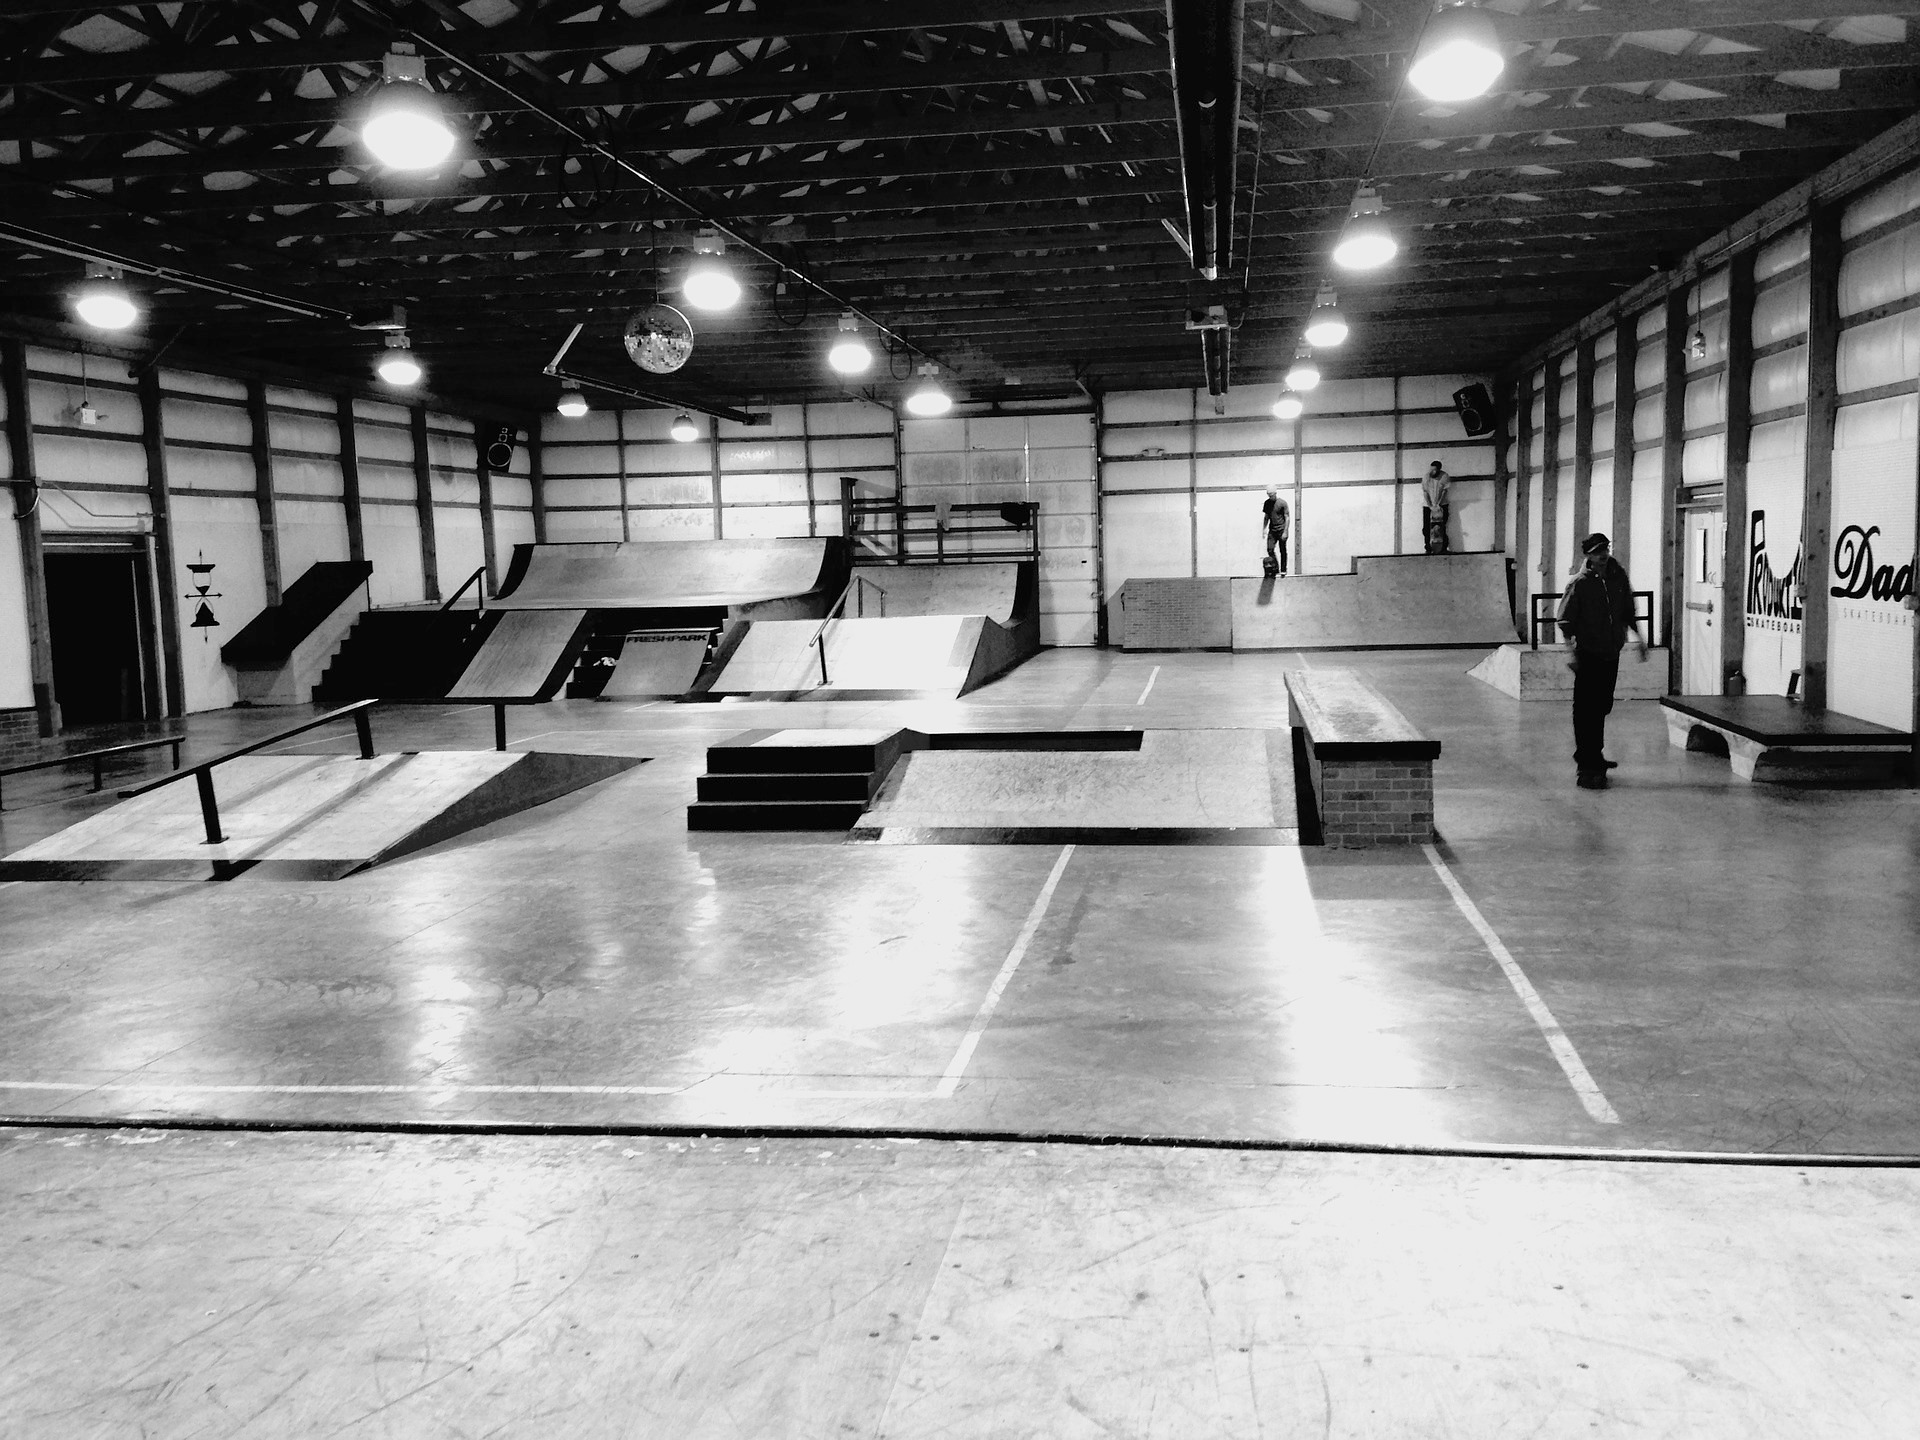 Indoor skateboard park